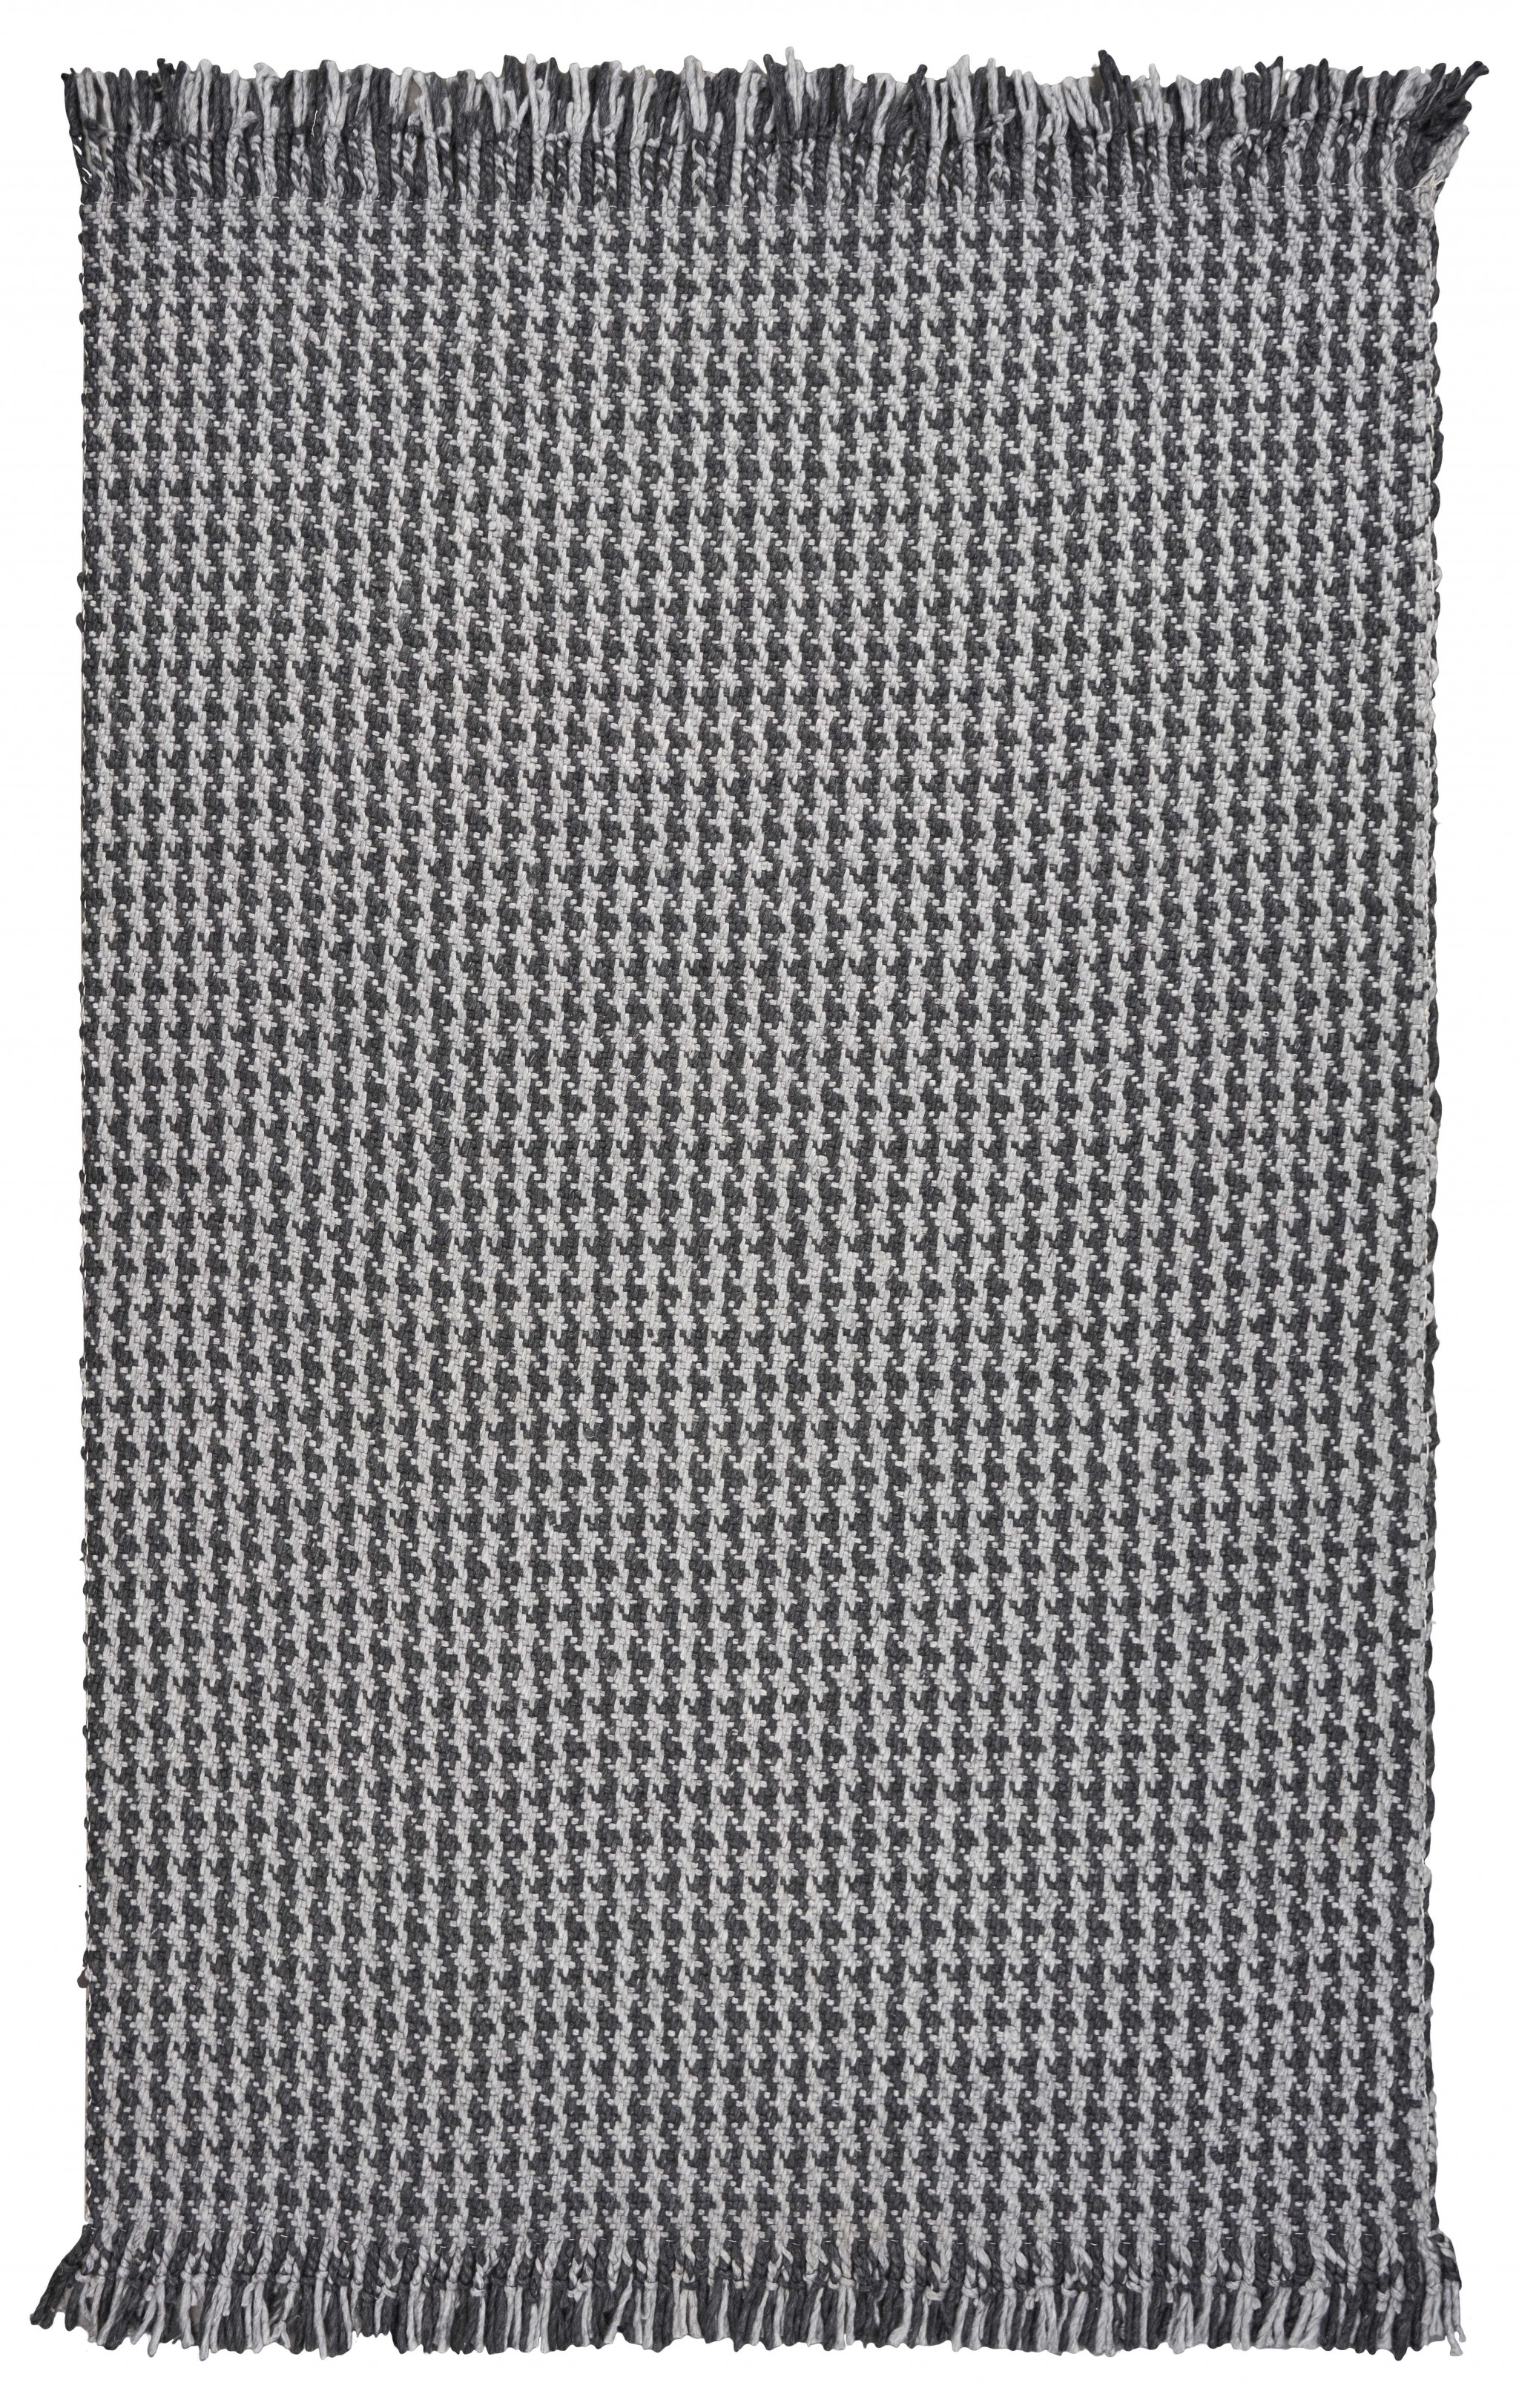 3' X 5' Grey Braided Wool Area Rug With Fringe-354078-1